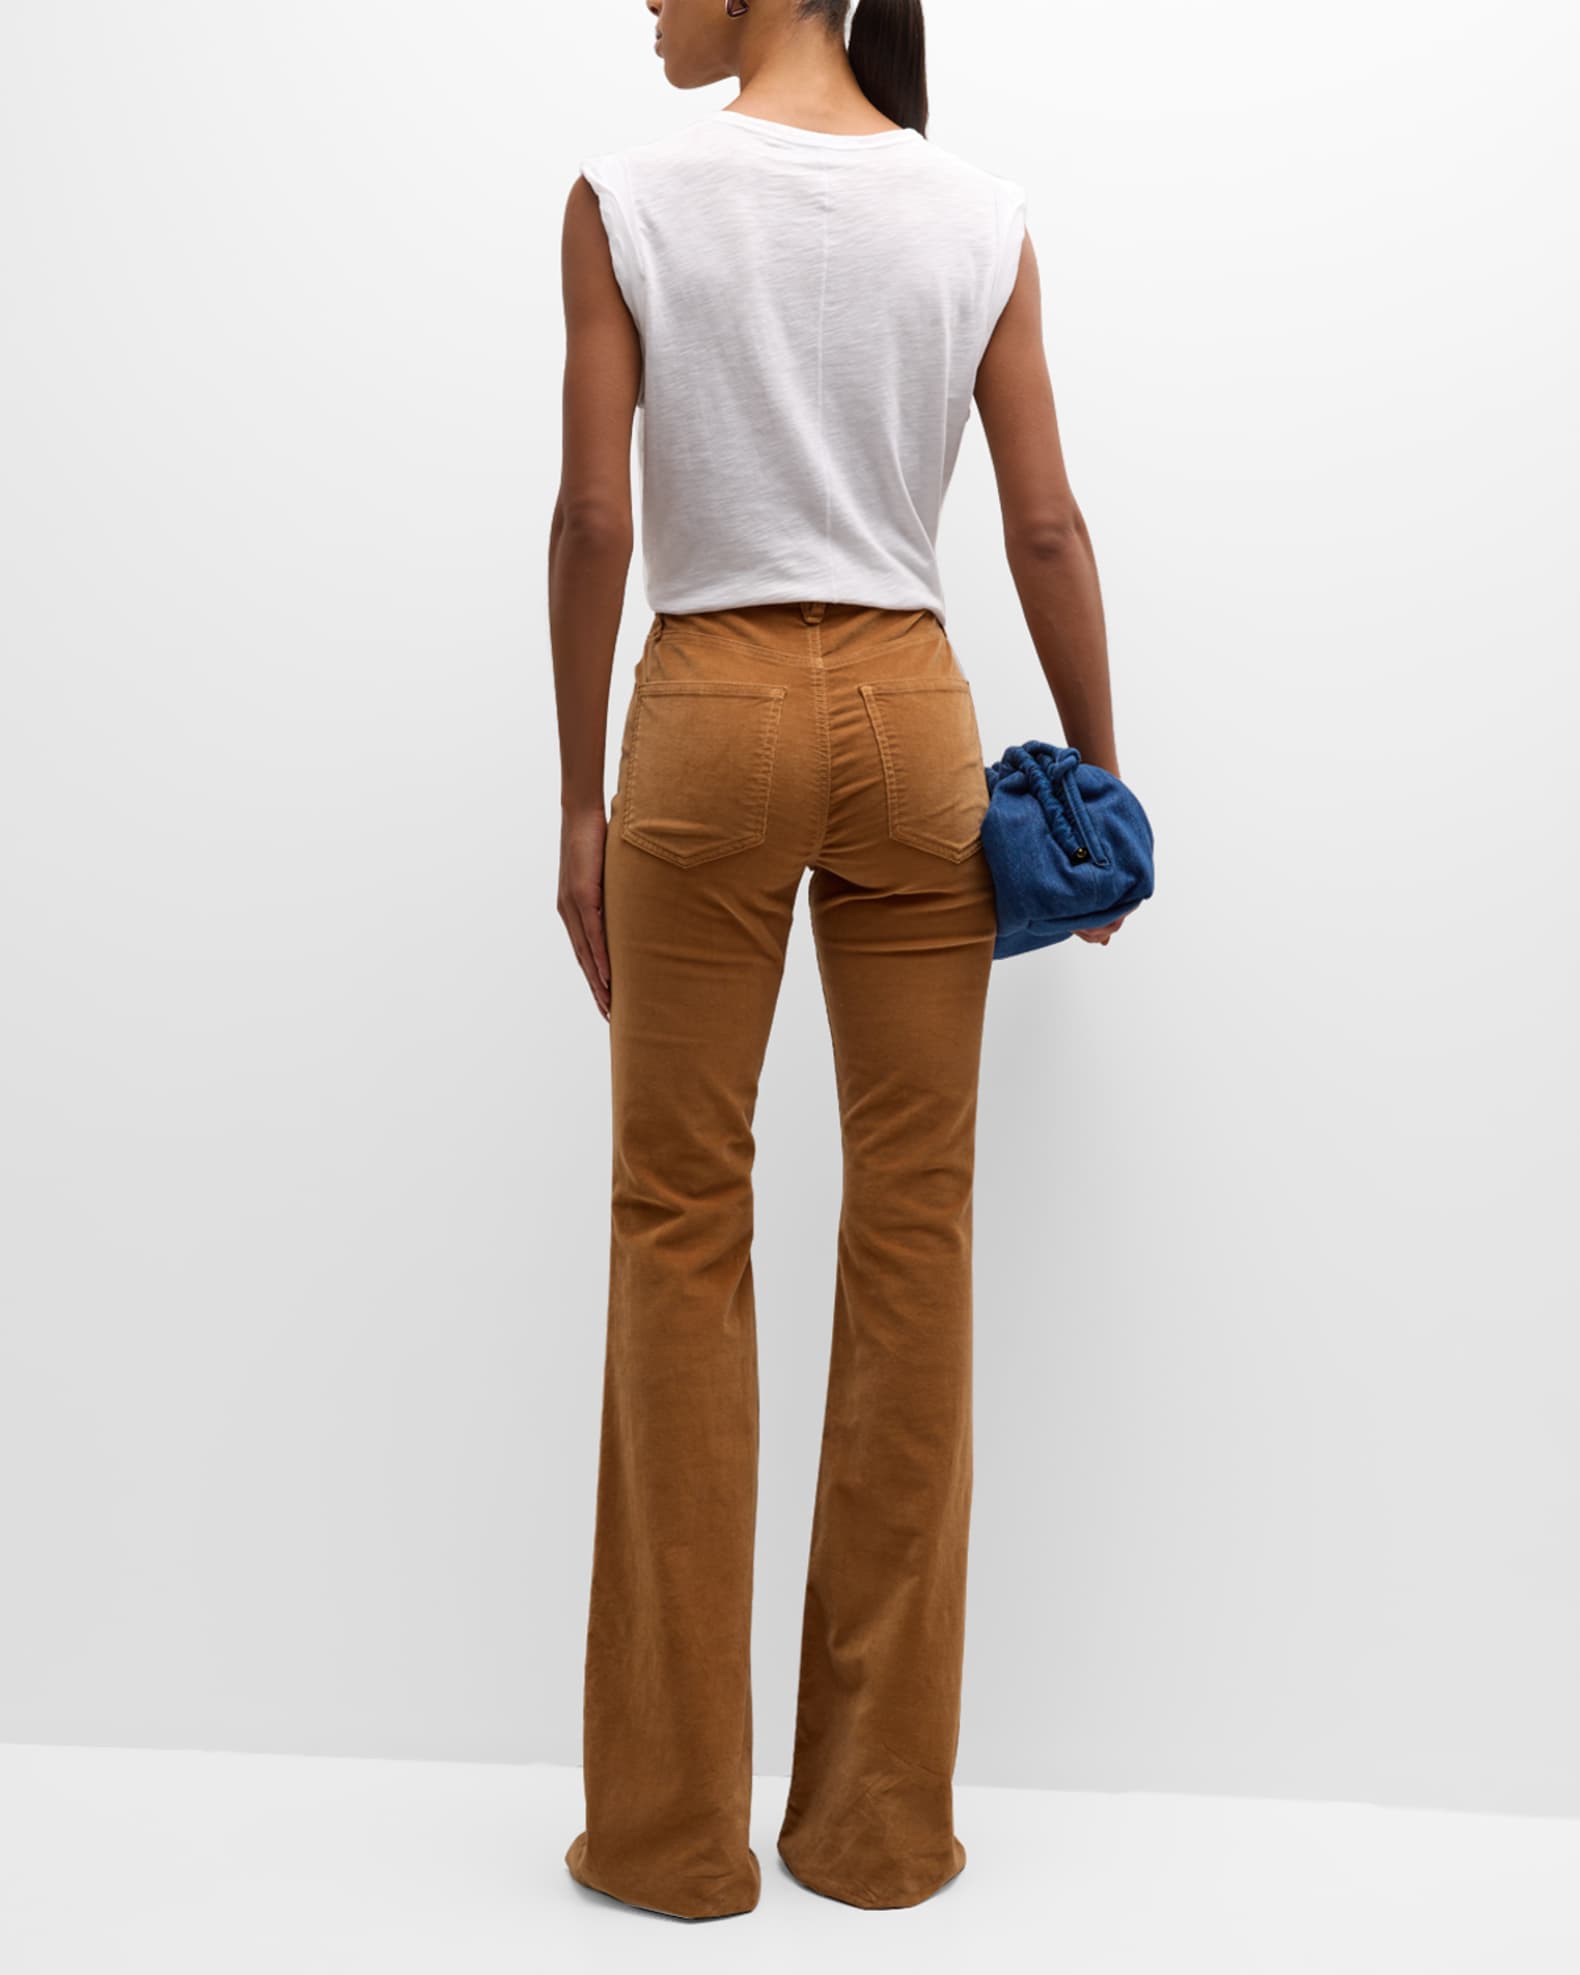 Louis Vuitton 3D Monogram Stripe Accent Pajama Pants White. Size 36